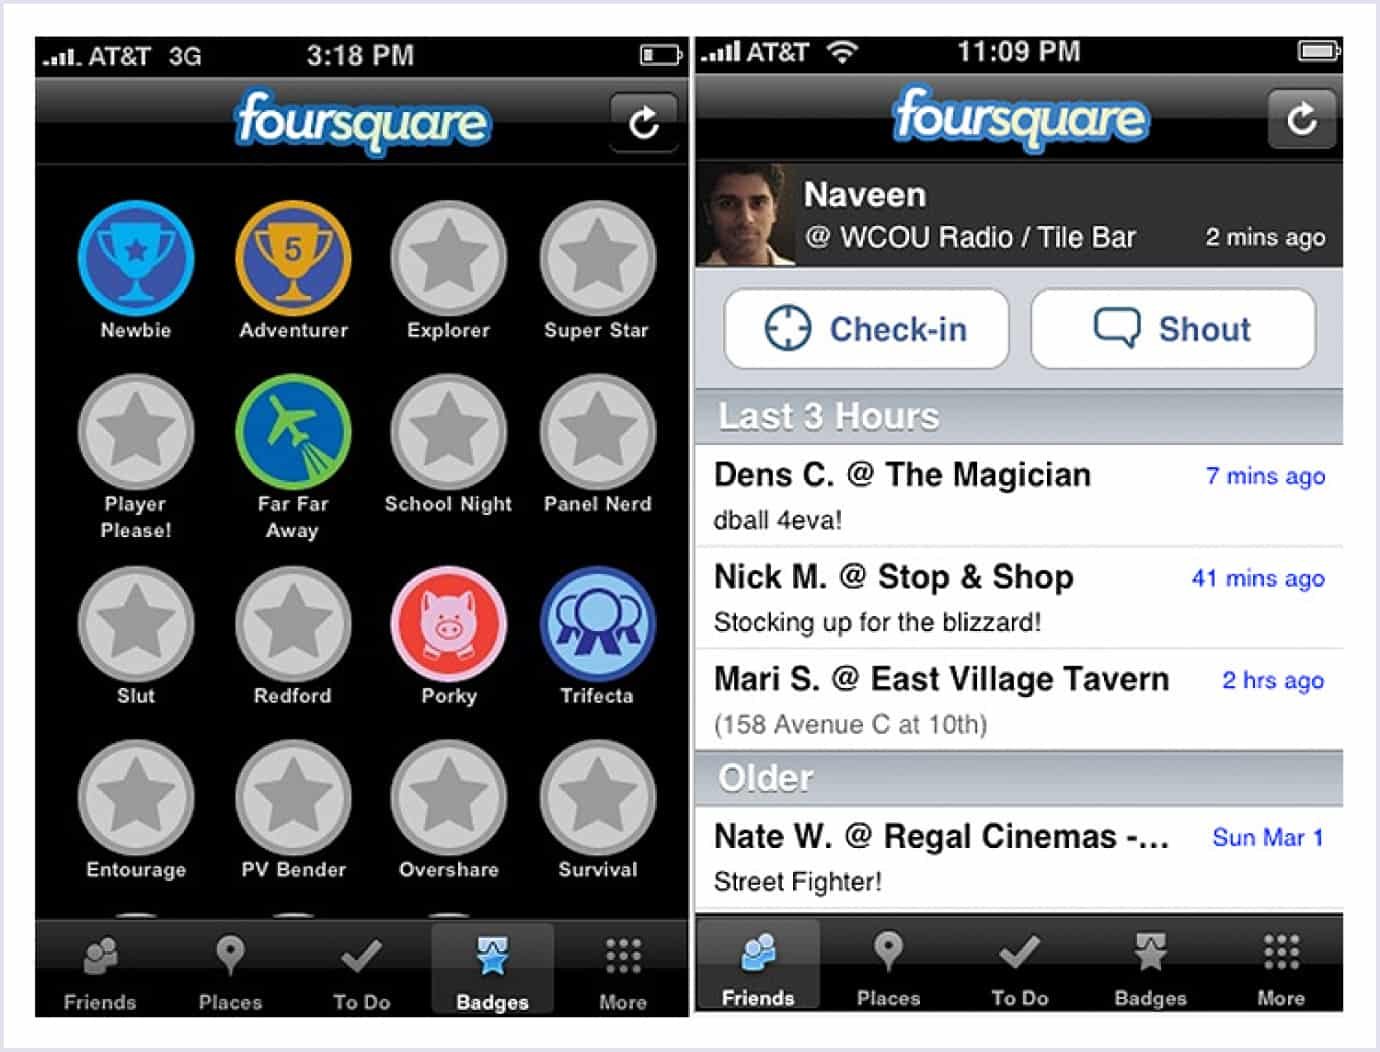 Minimum viable product by Foursquare